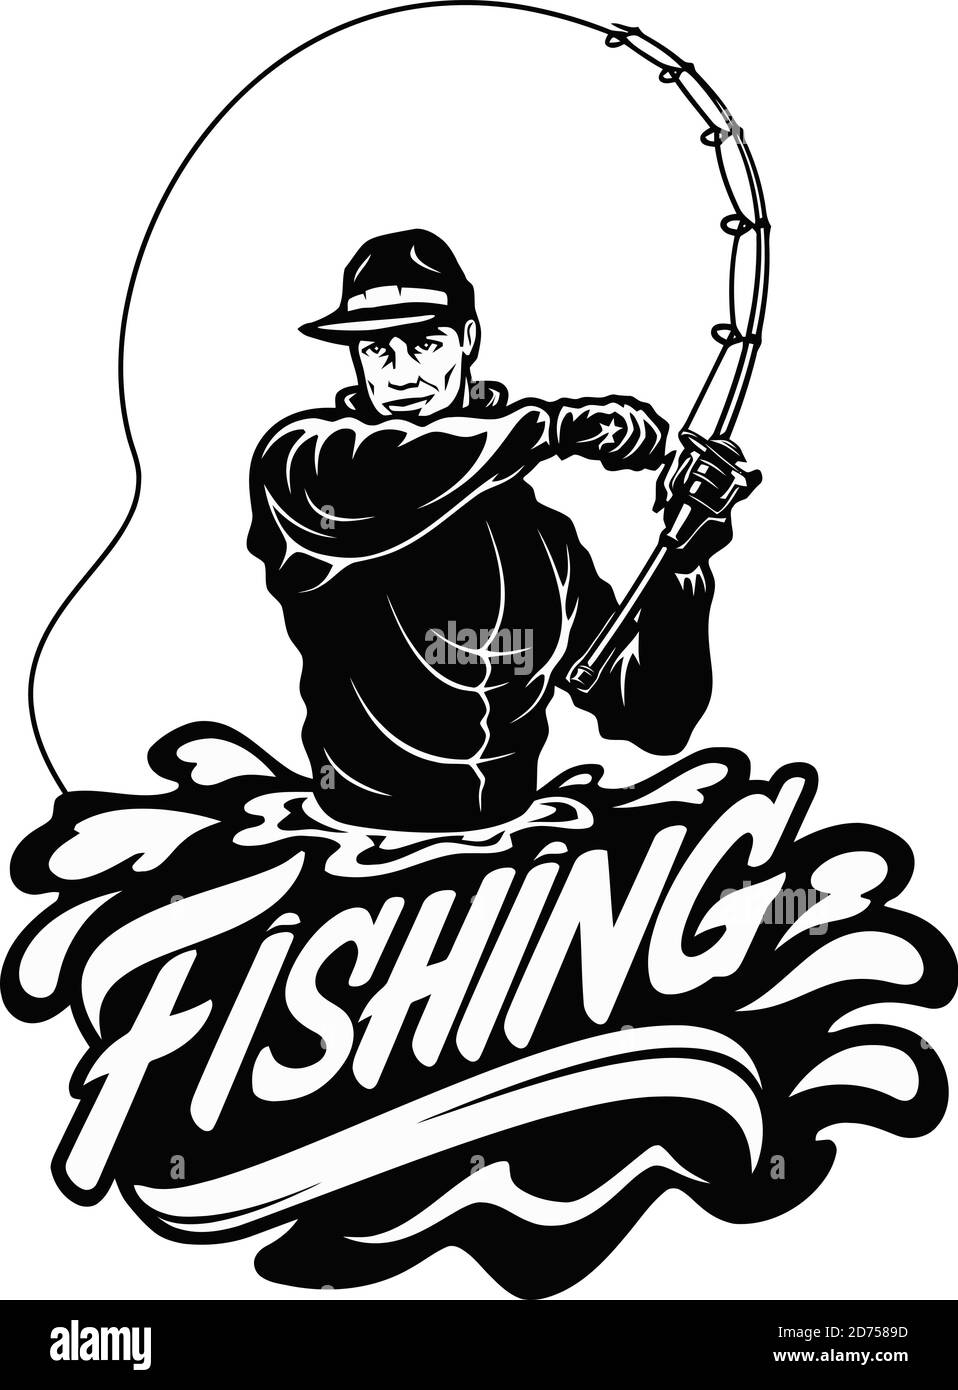 Fishing hook cartoon Black and White Stock Photos & Images - Alamy